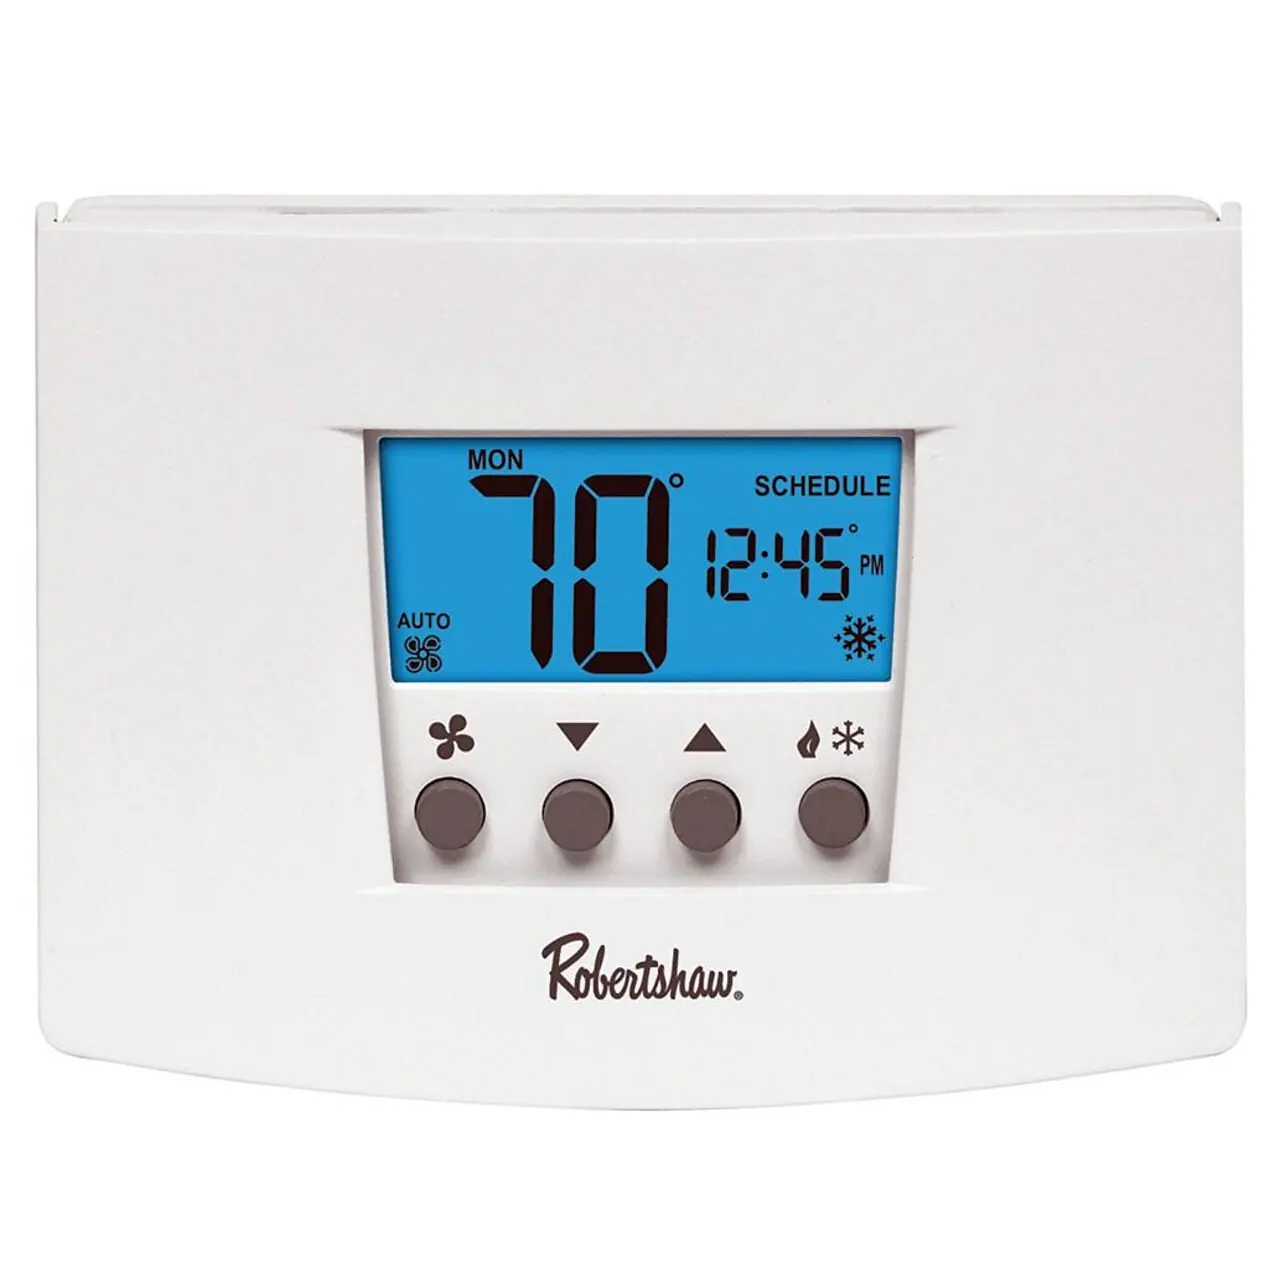 Cheap Robertshaw Digital Thermostat, find Robertshaw Digital Thermostat